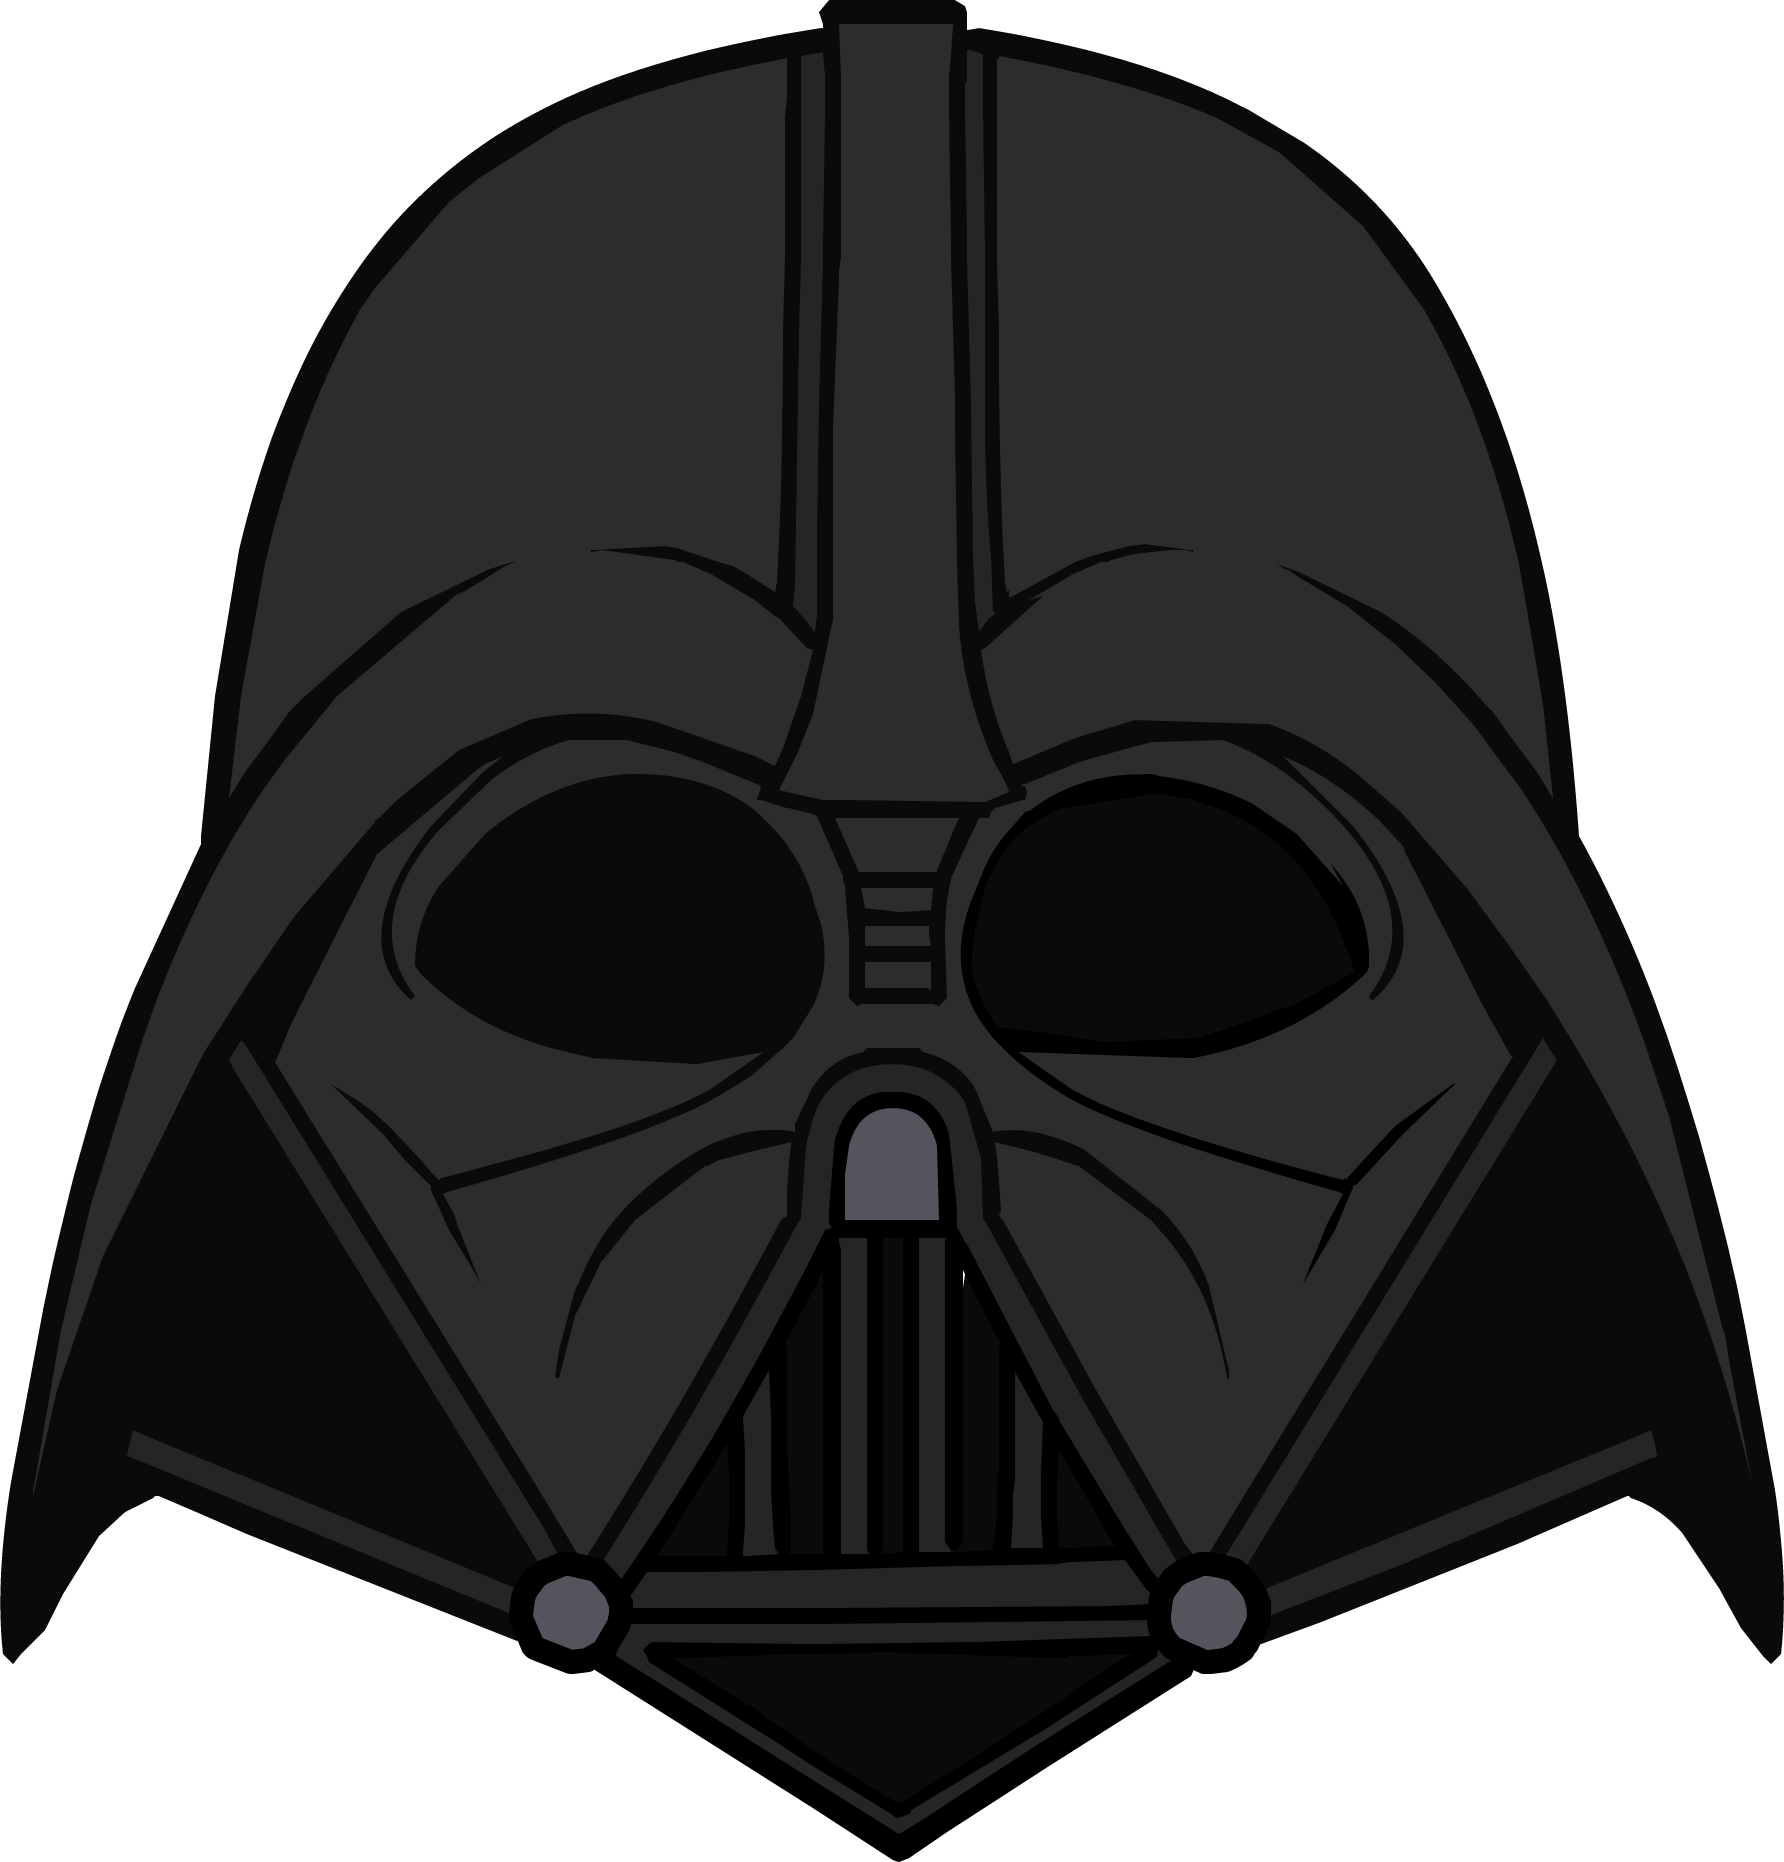 Darth Vader Máscara PNG Imagen PNG